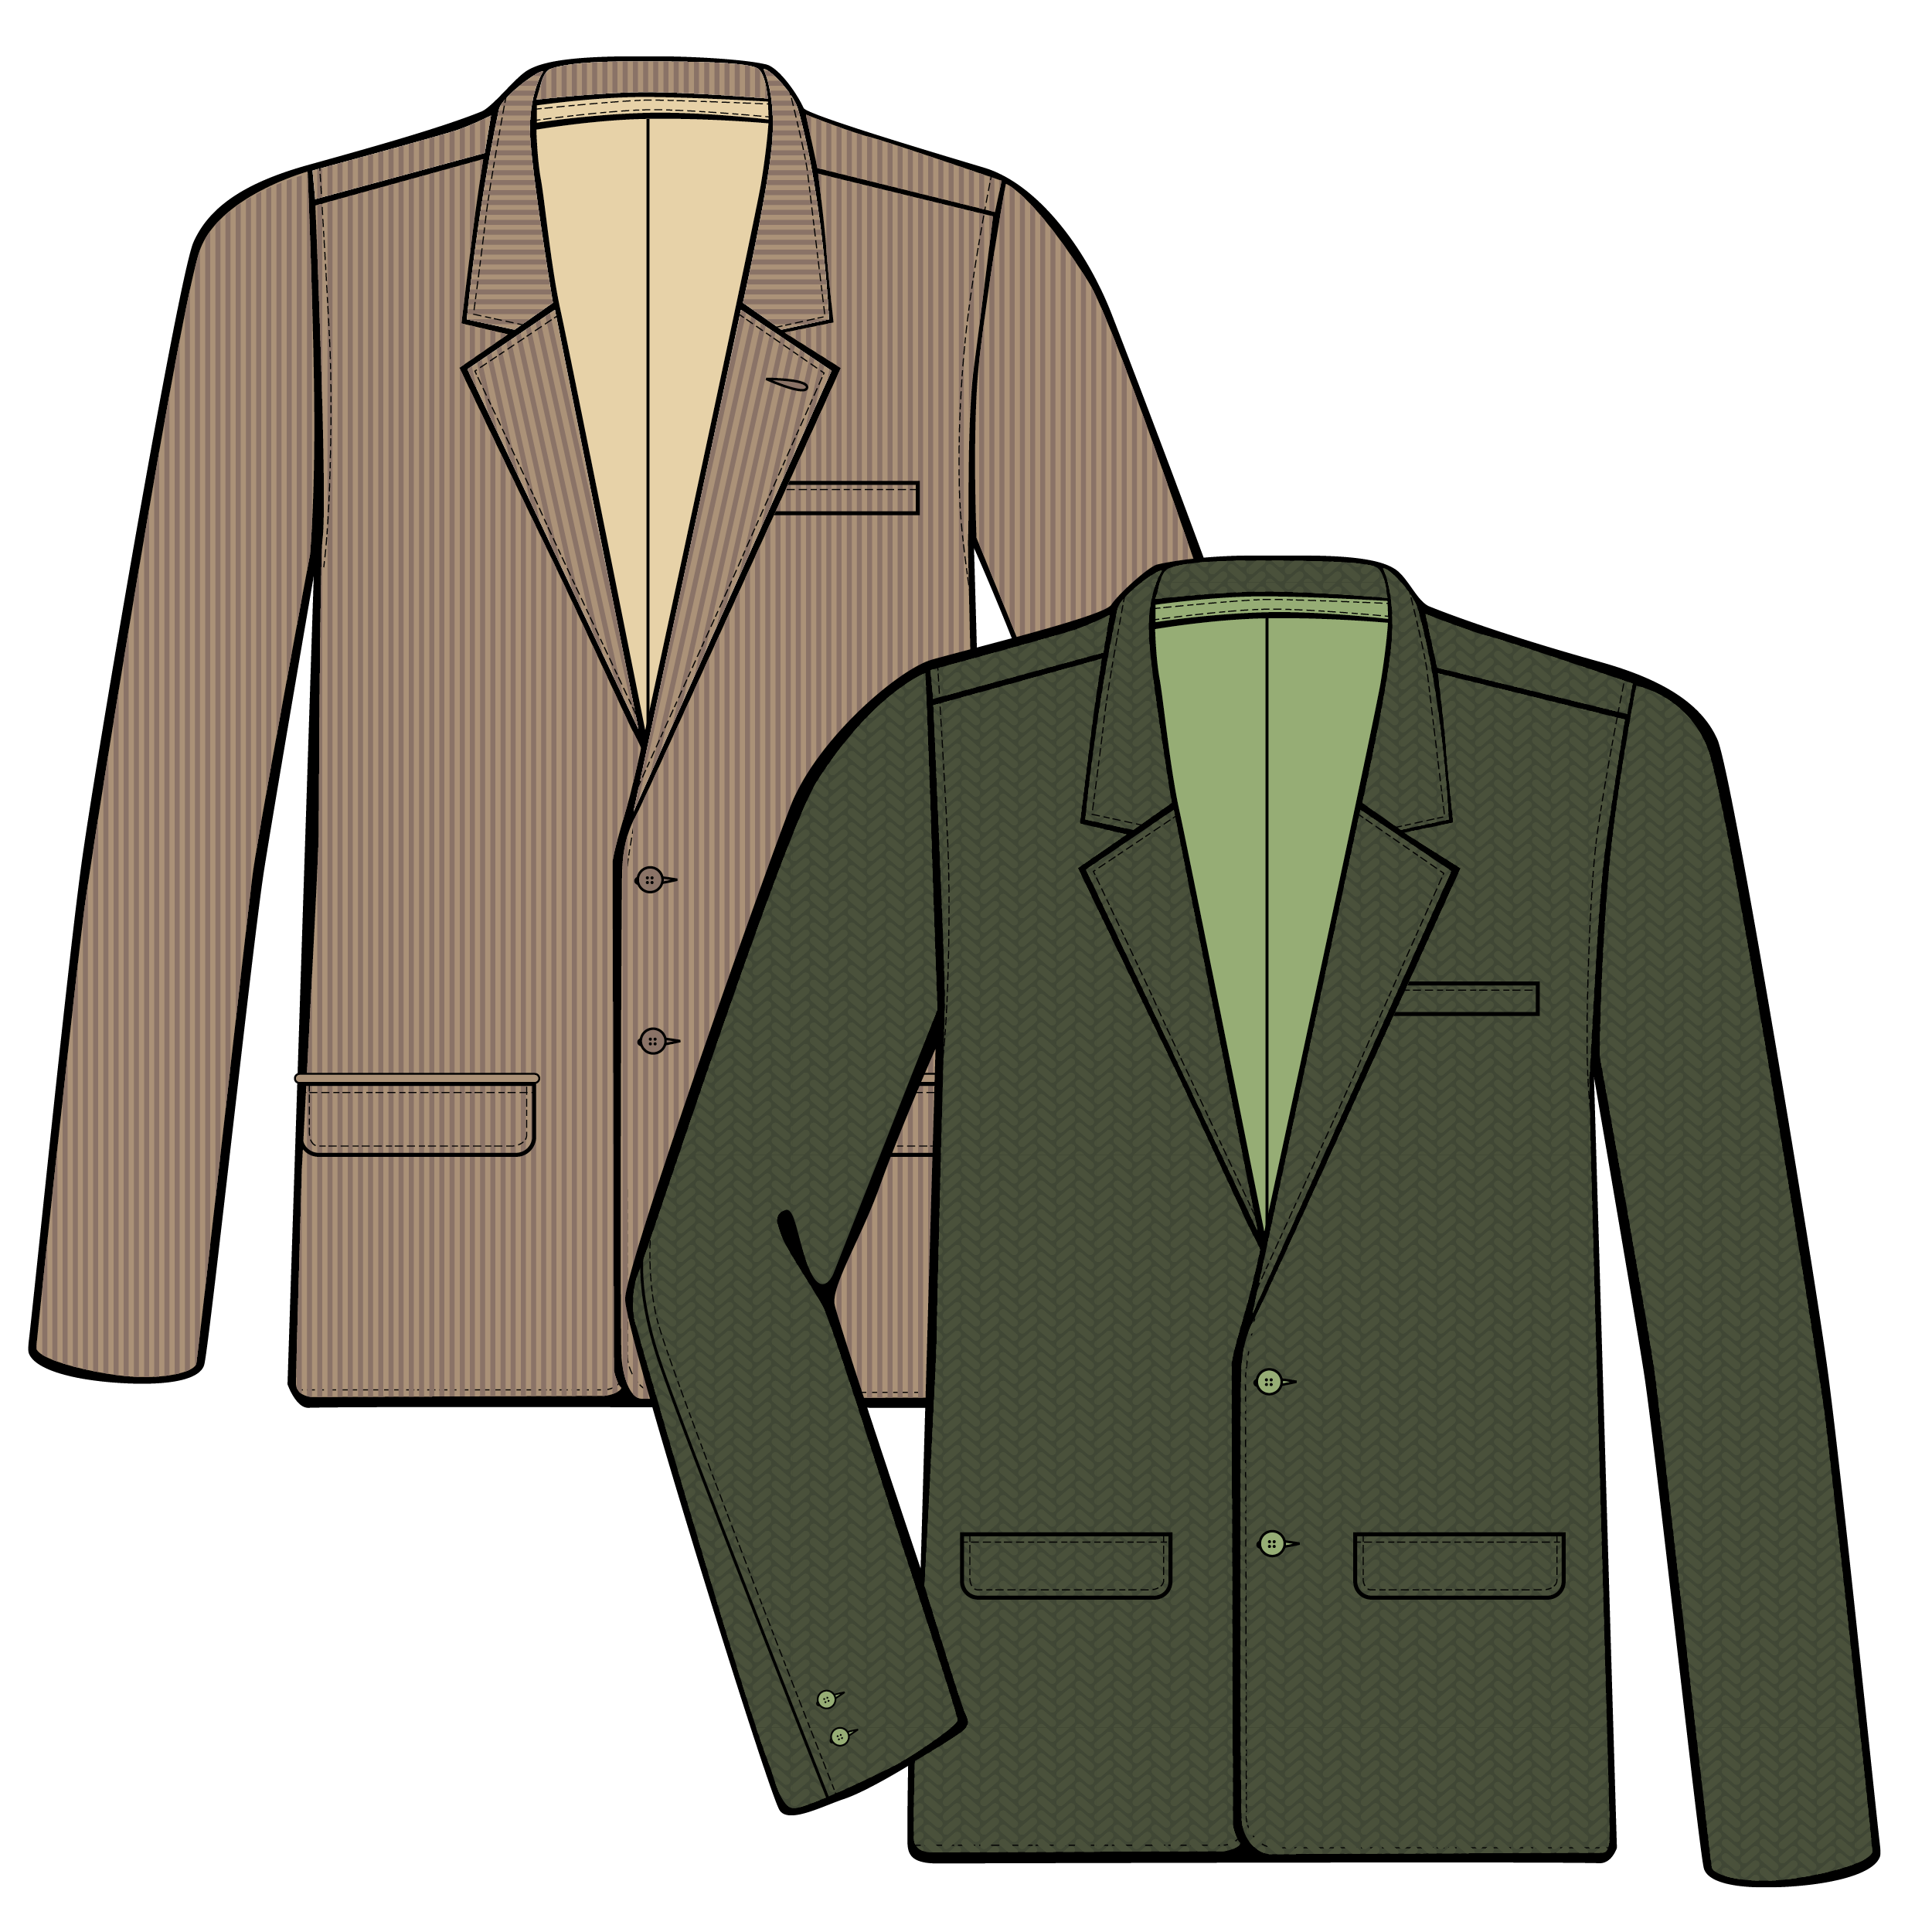 Men's Sportcoats Illustration